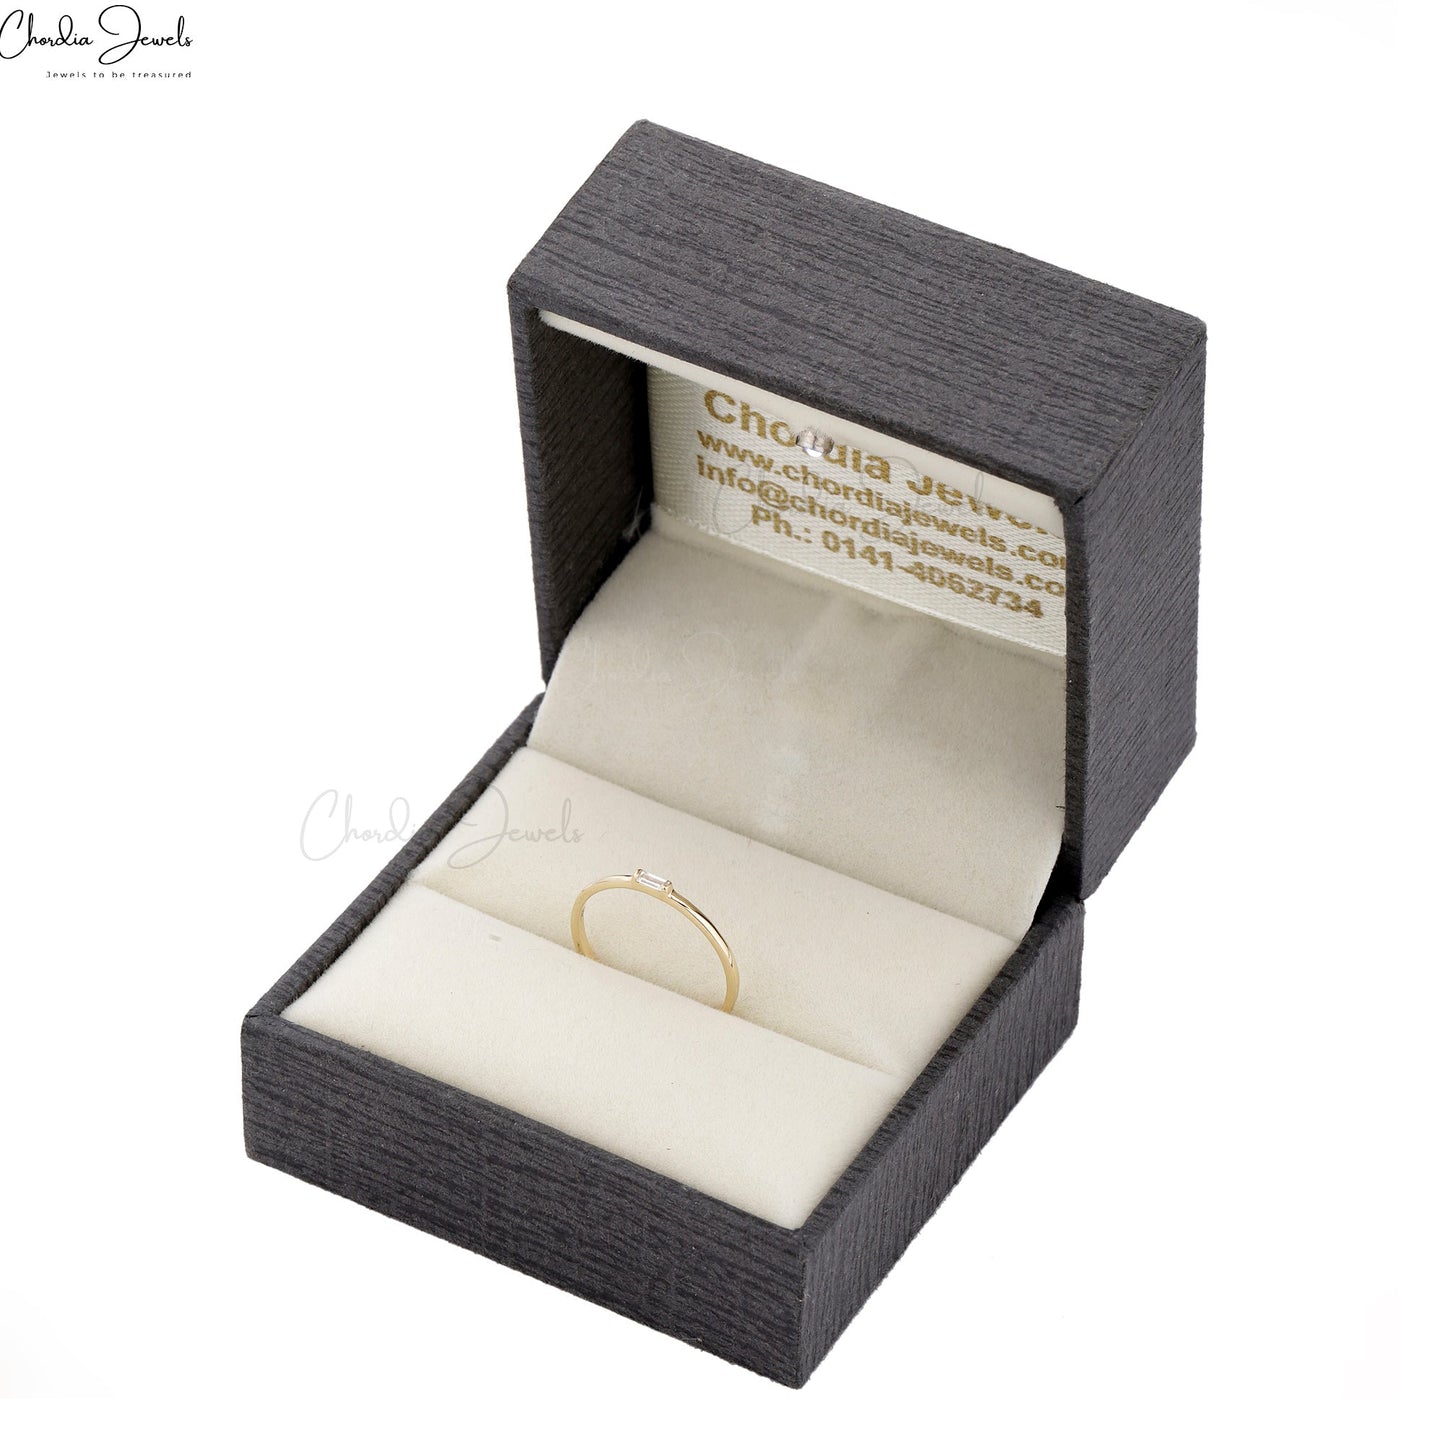 14K Solid Yellow Gold Diamond Ring, 0.04 Carat G-H White Diamond Anniversary Engagement Ring, 3x1.5mm Baguette Cut Diamond Ring